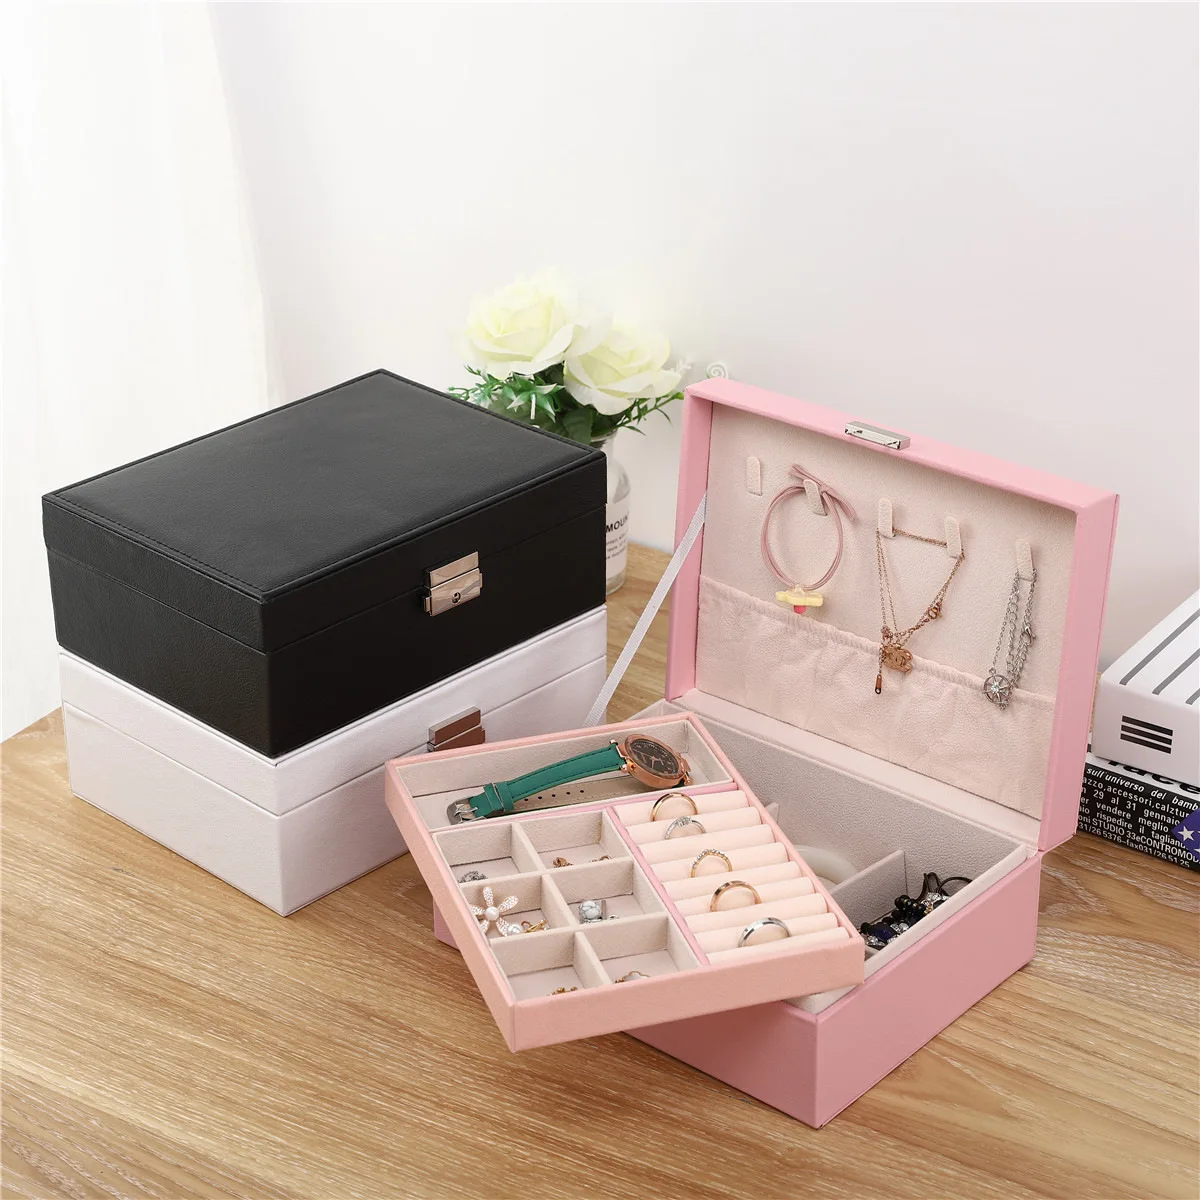 2021 New Double-Layer Velvet Jewelry Box European Jewelry Storage Box Large Space Jewelry Holder Gift Box